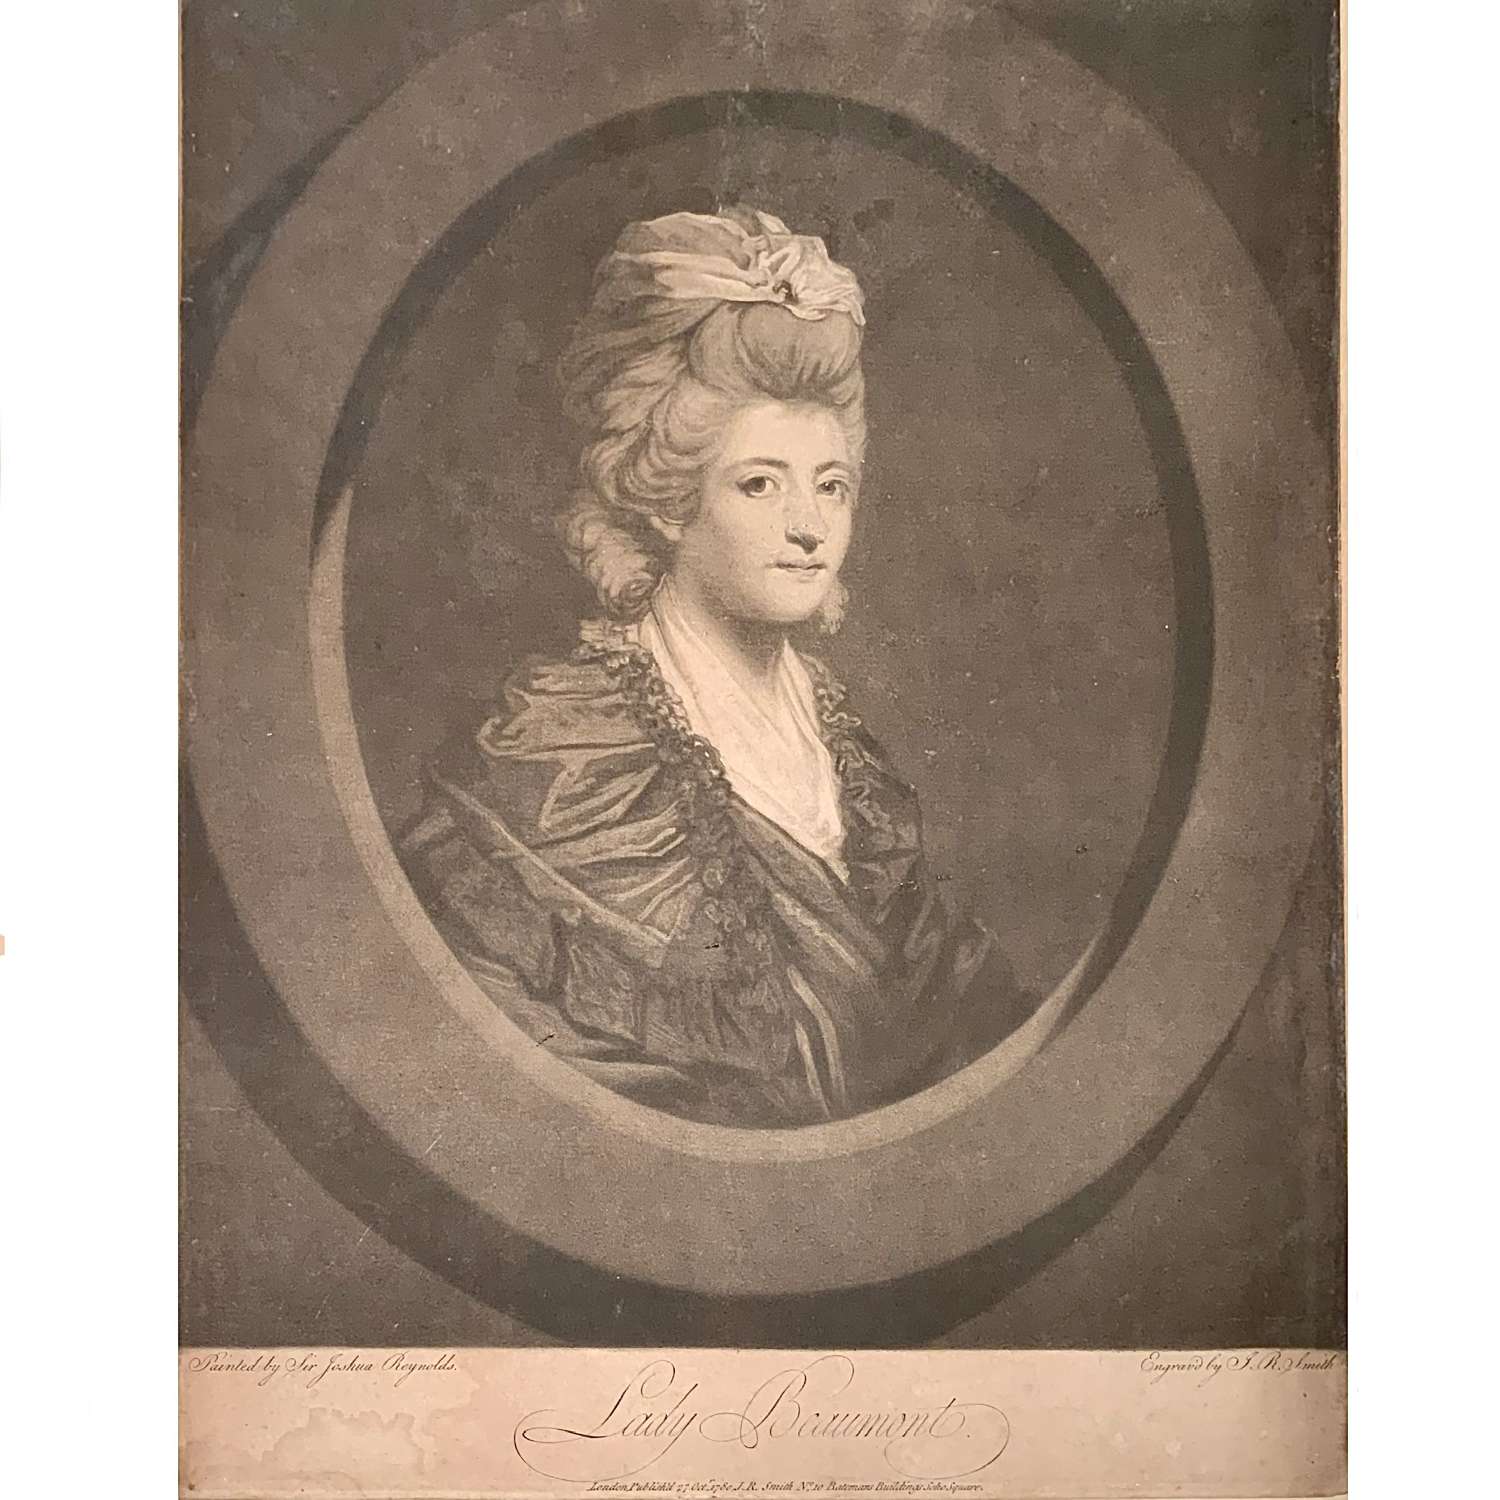 Sir Joshua Reynolds (1723-1792), “Lady Beaumont”, Mezzotint Portrait